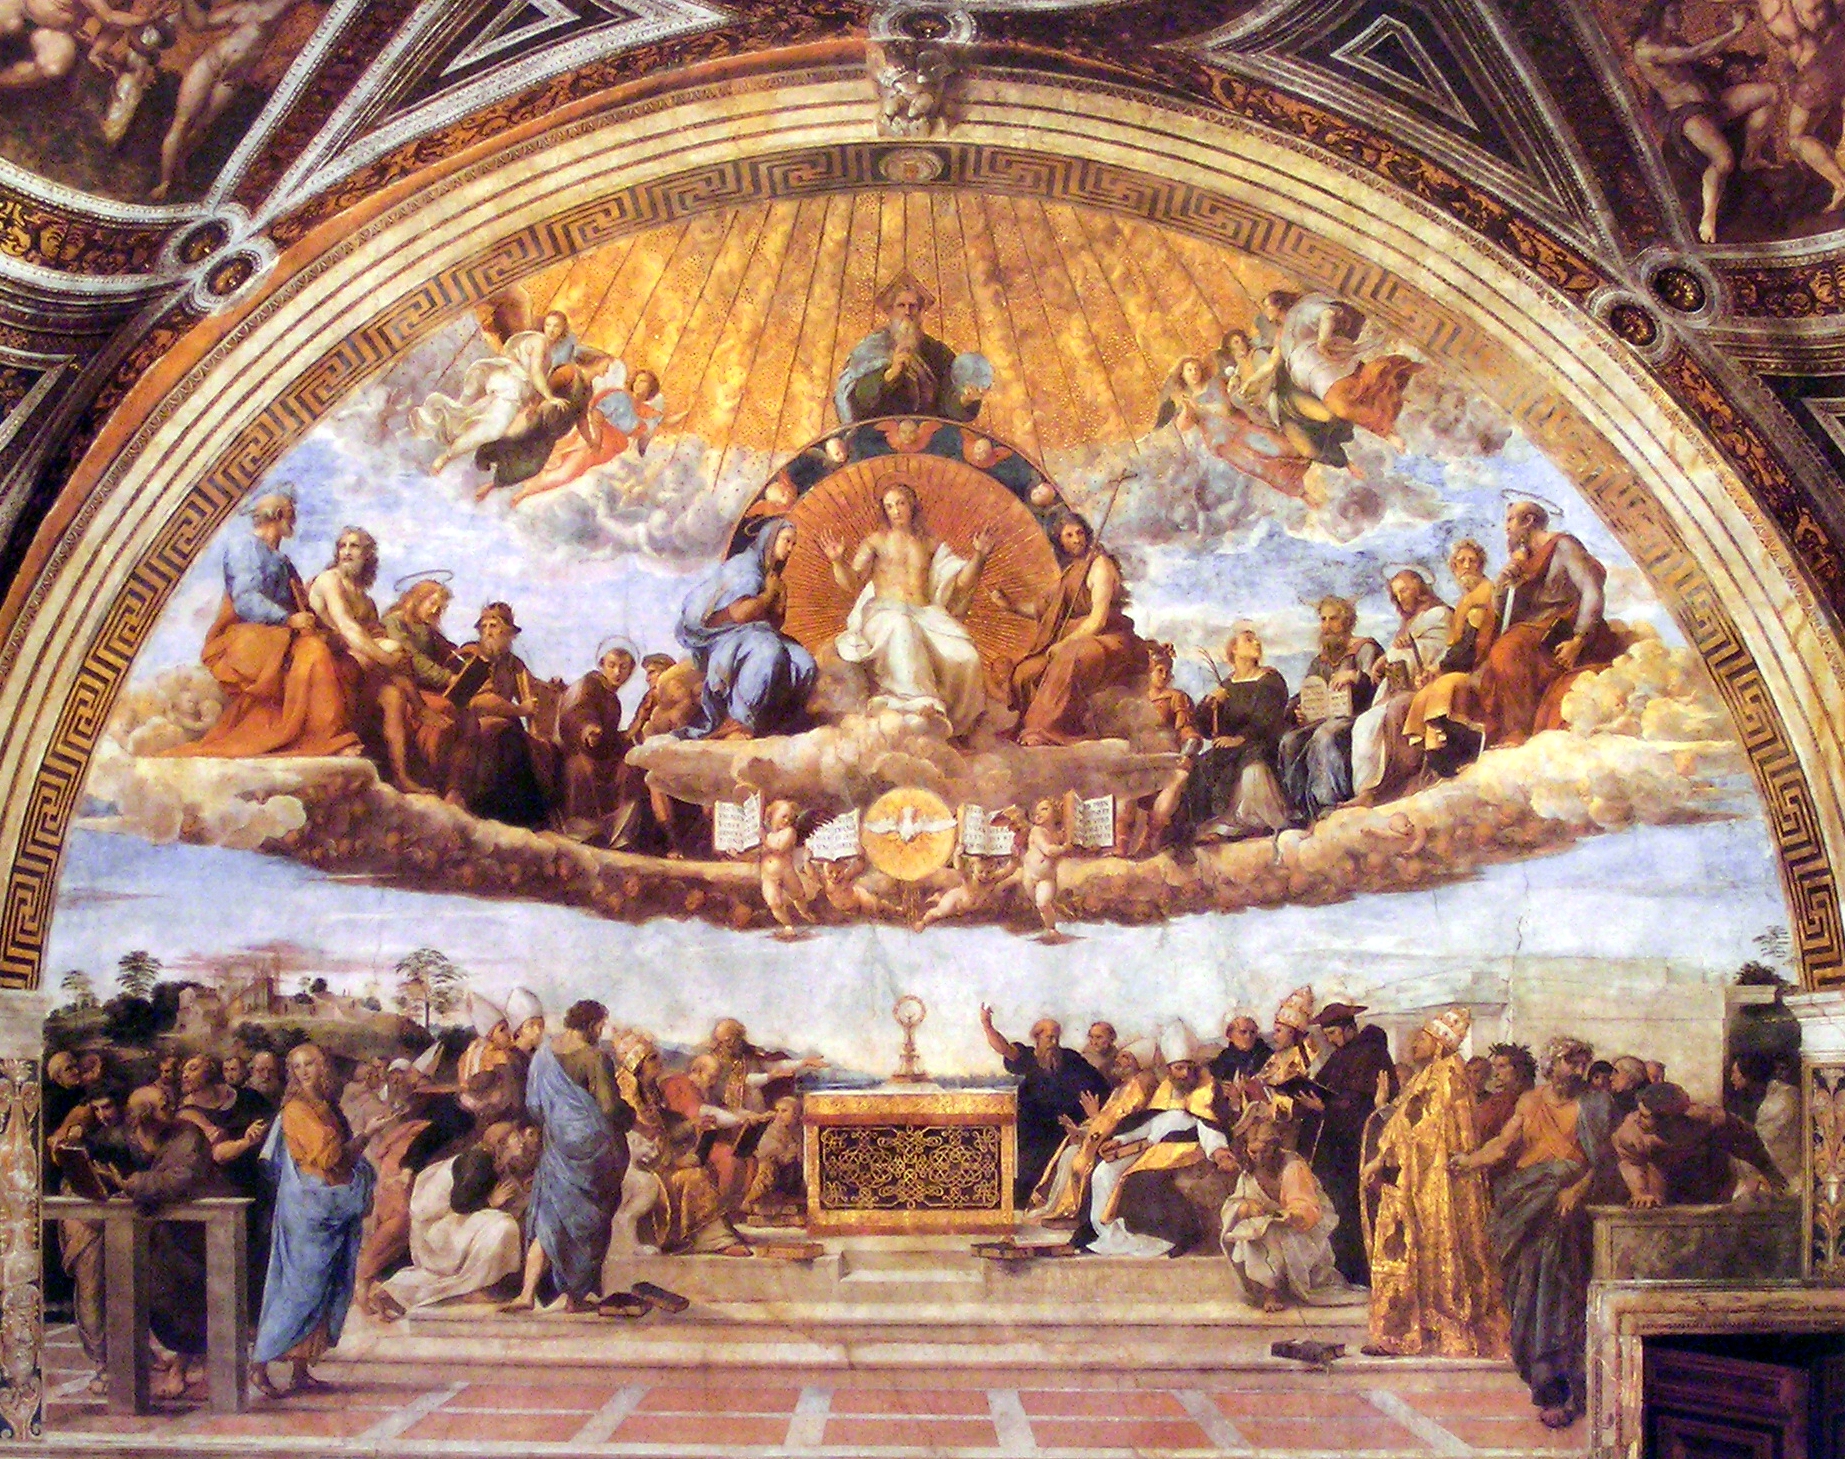 Raphael, Disputation Concerning the Holy Sacrament (Vatican)